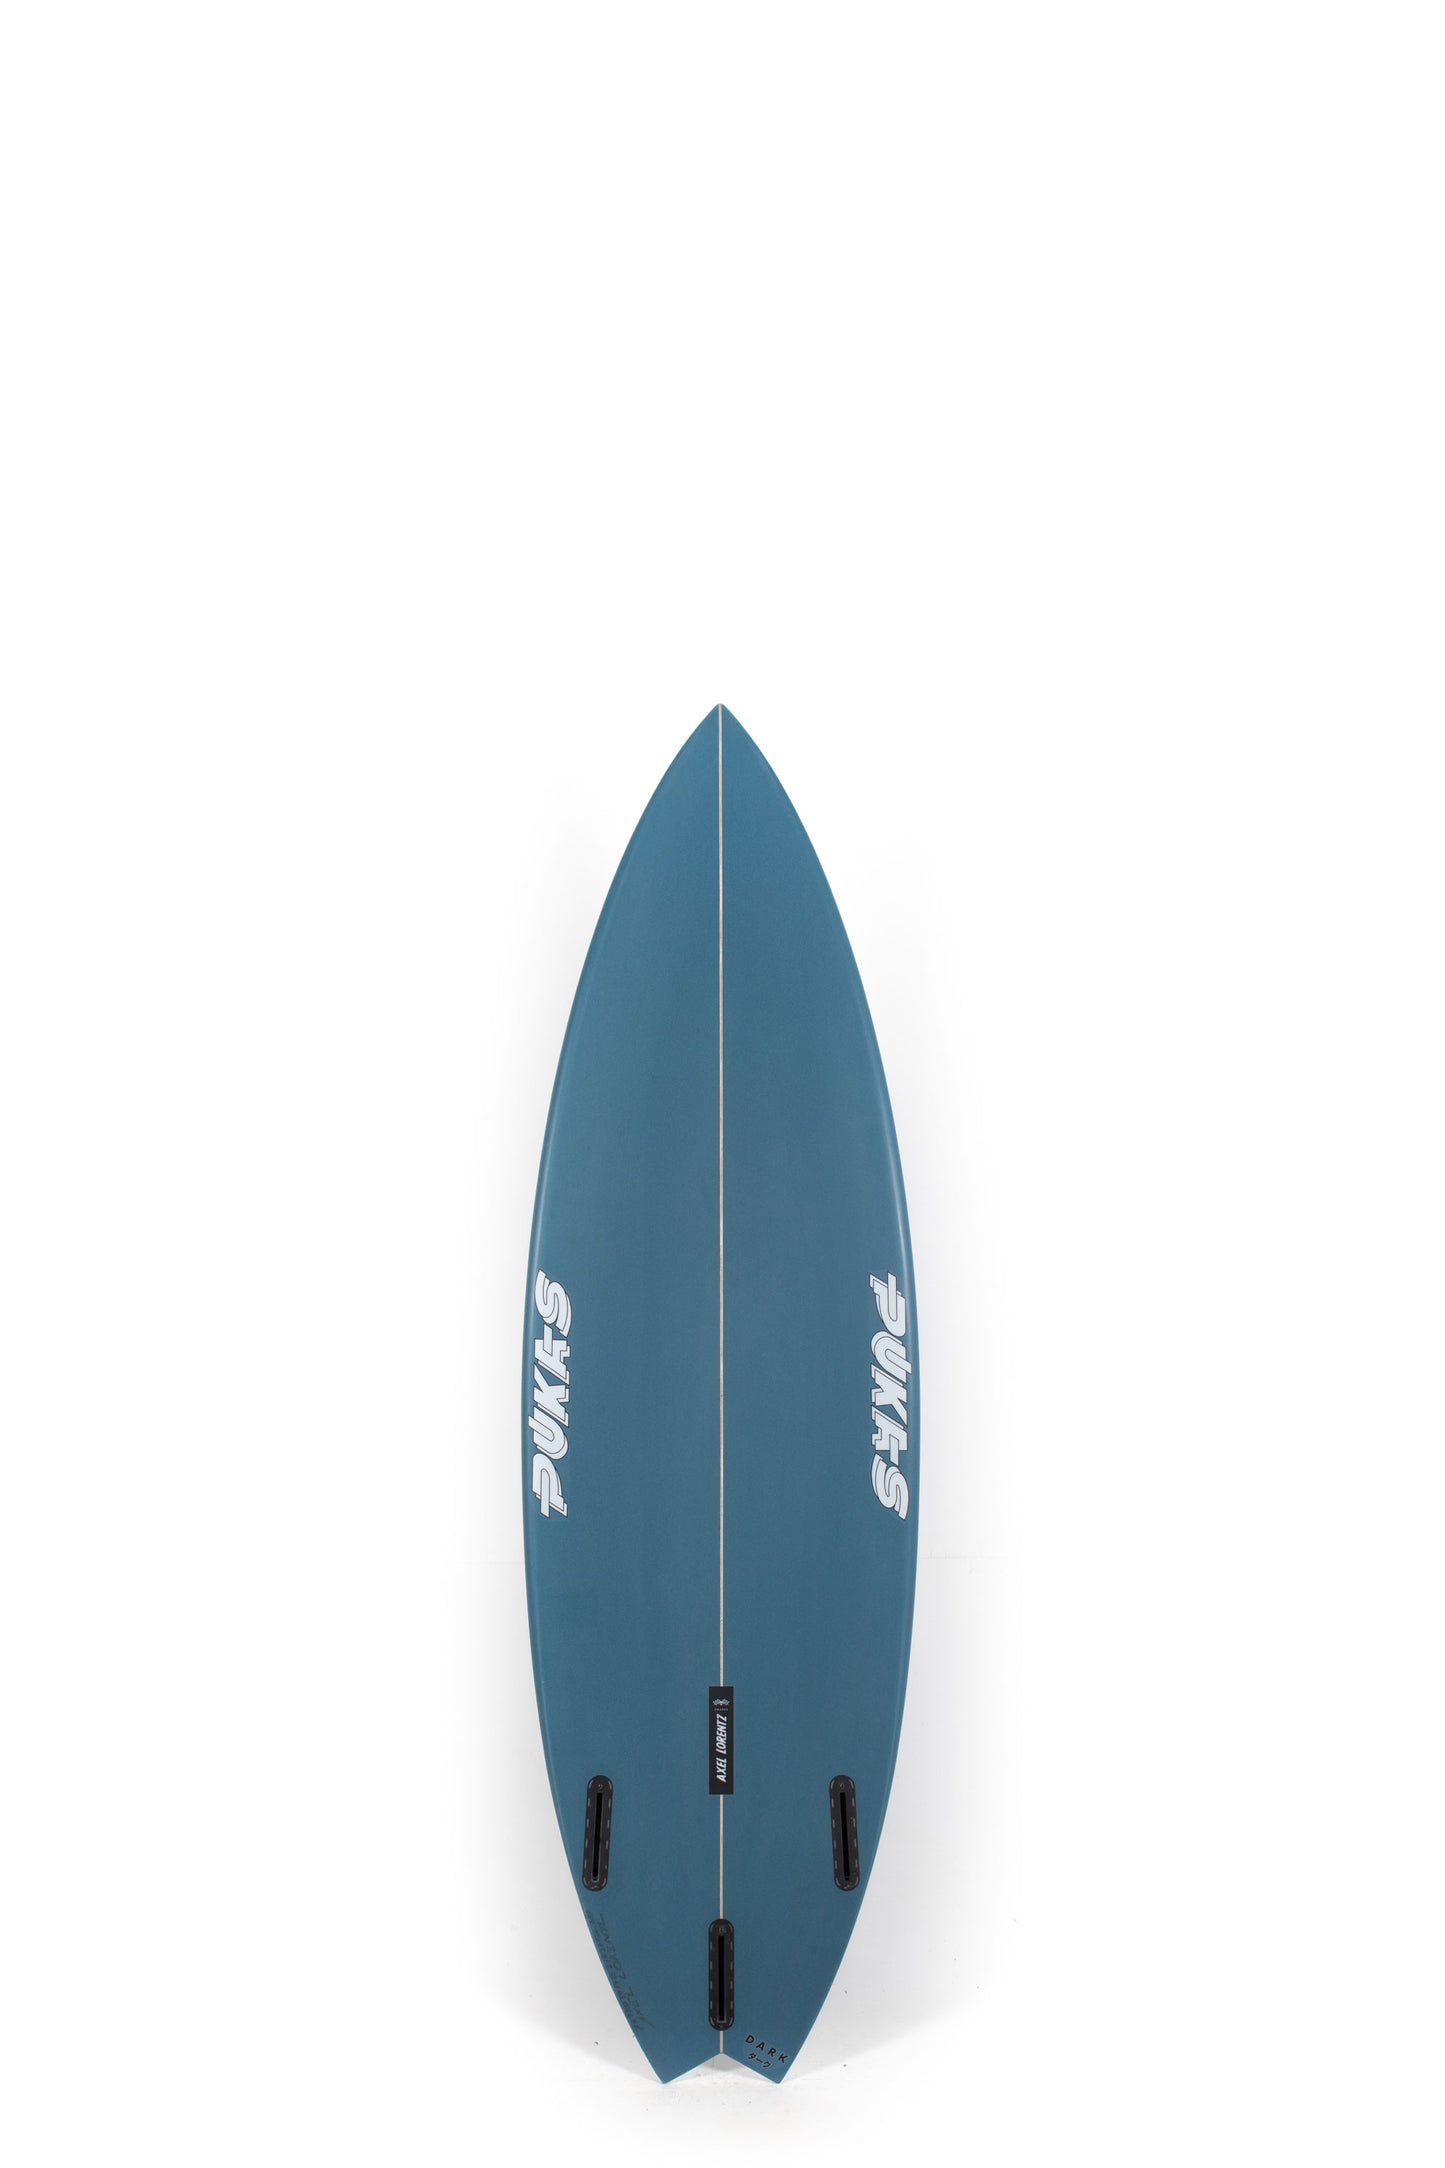 Pukas Surf Shop - Pukas Surfboard - DARK by Axel Lorentz - 5’9” x 19,25 x 2,18 - 27L - AX09200